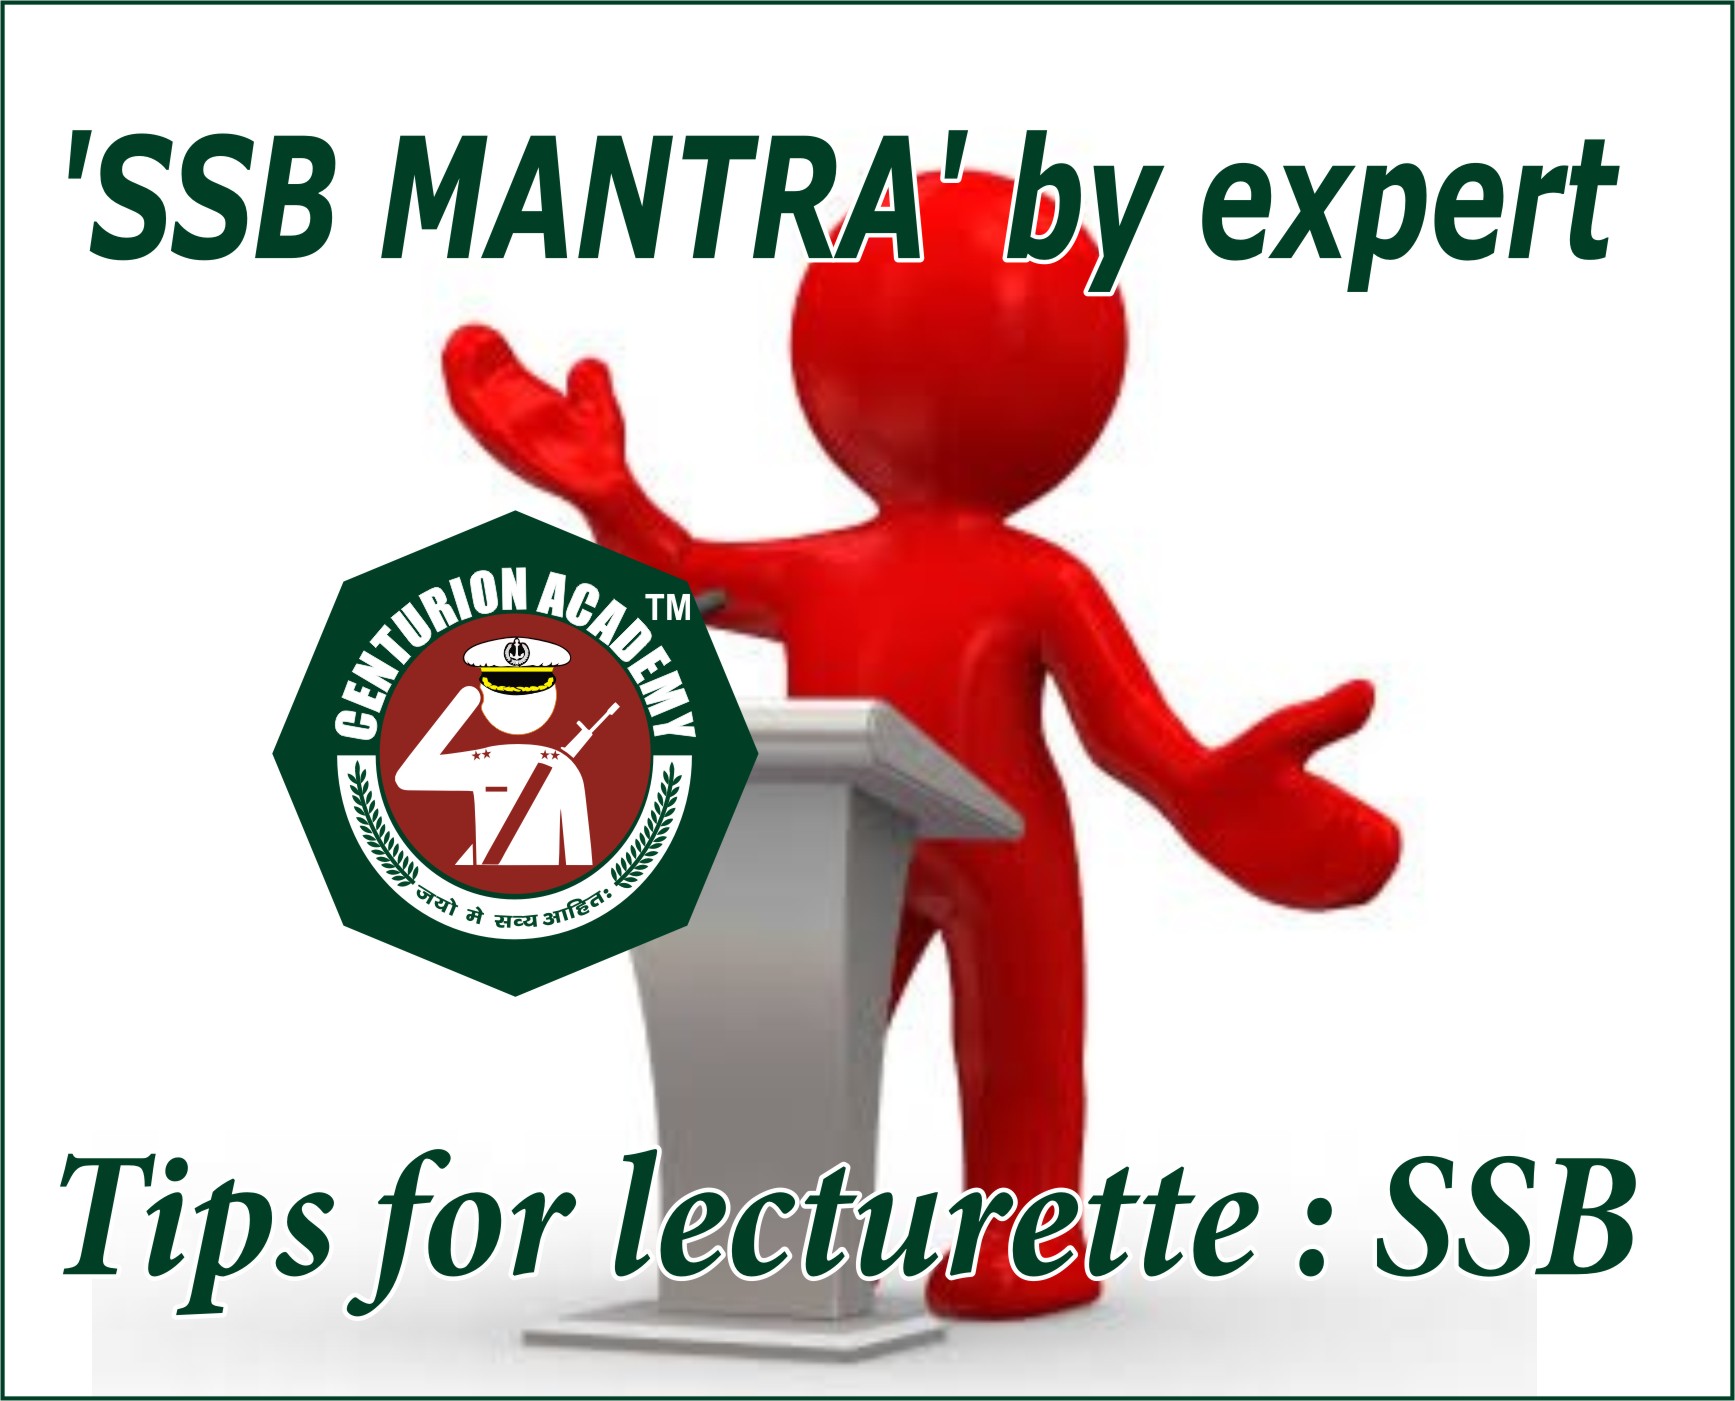 TIPS FOR LECTURETTE- SSB